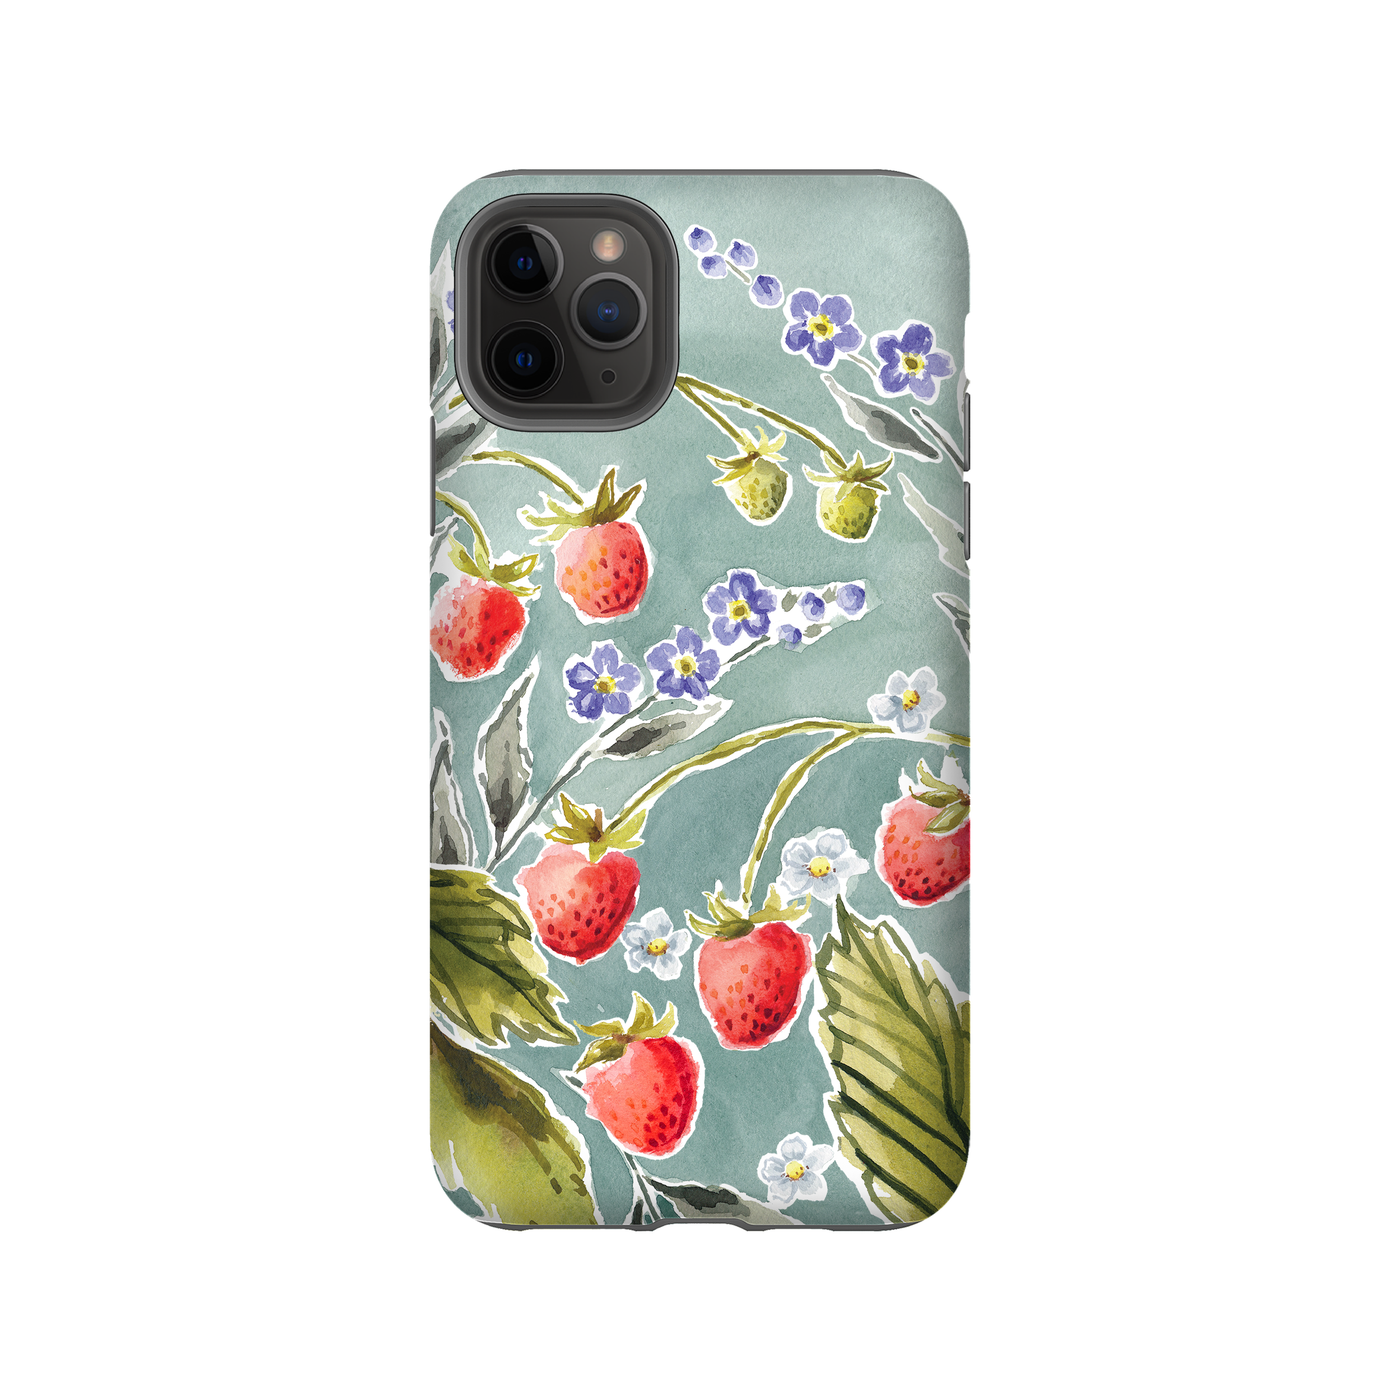 iPhone case in wild strawberries